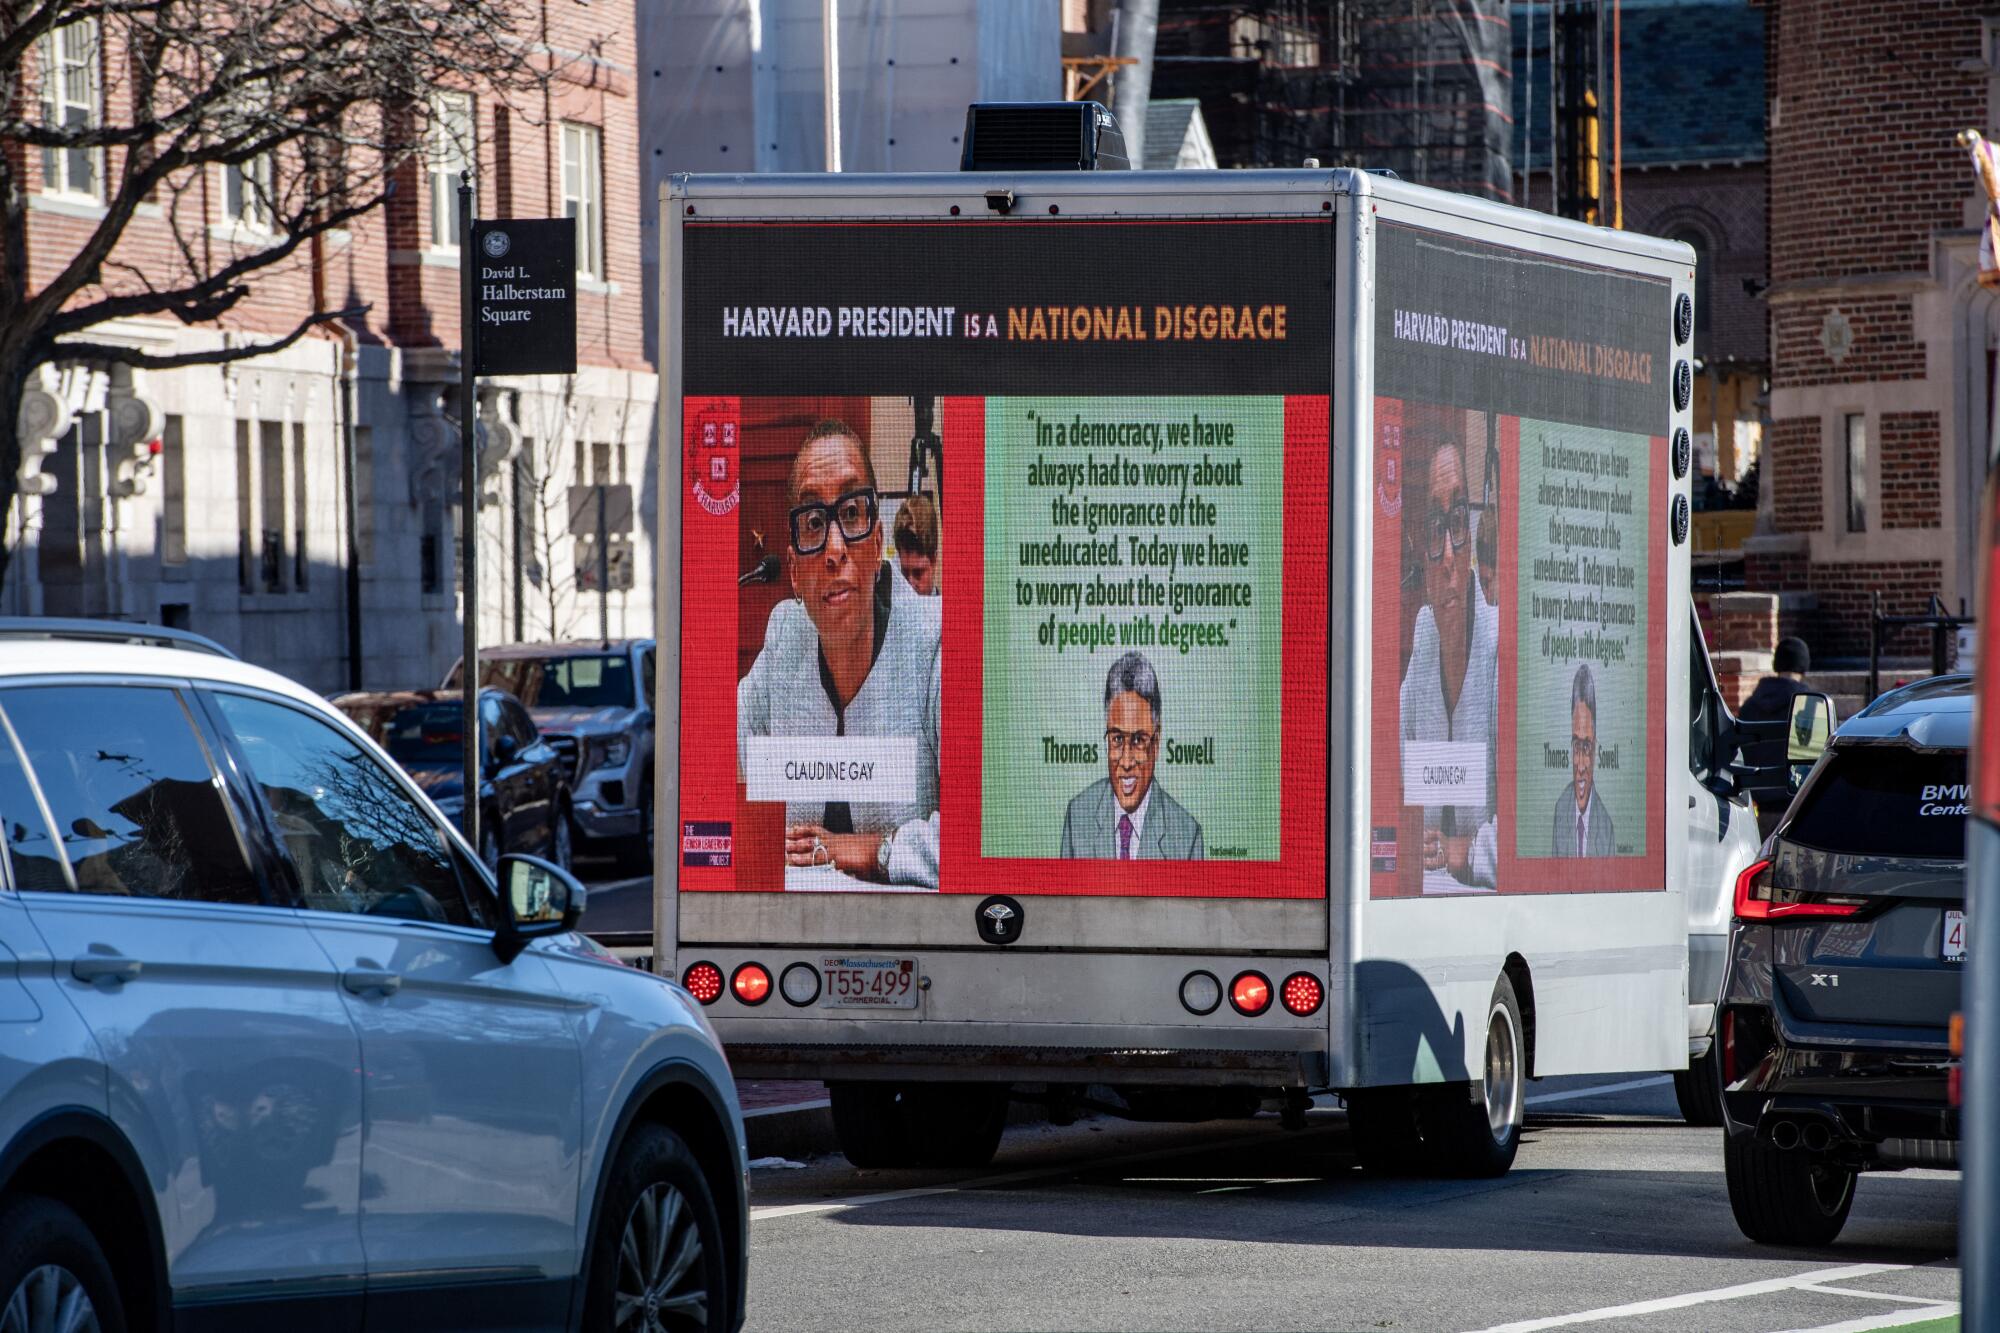 A truck displays a sign denouncing Harvard's president.